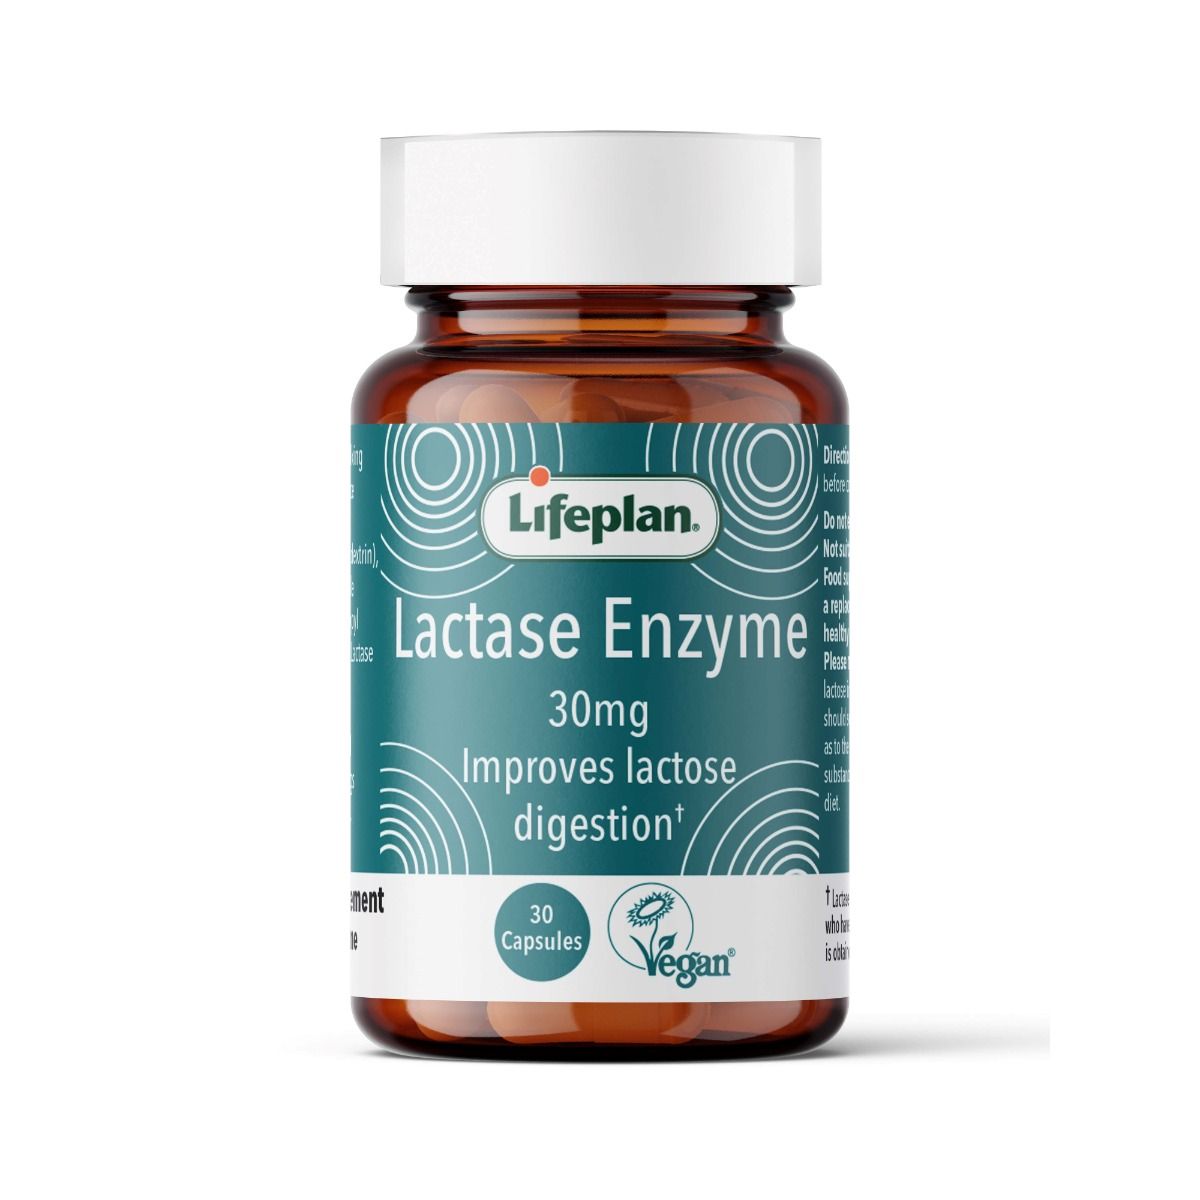 Lifeplan Lactase Enzyme 30mg Improves Lactose Digestion Vegan 30 Veg Capsules